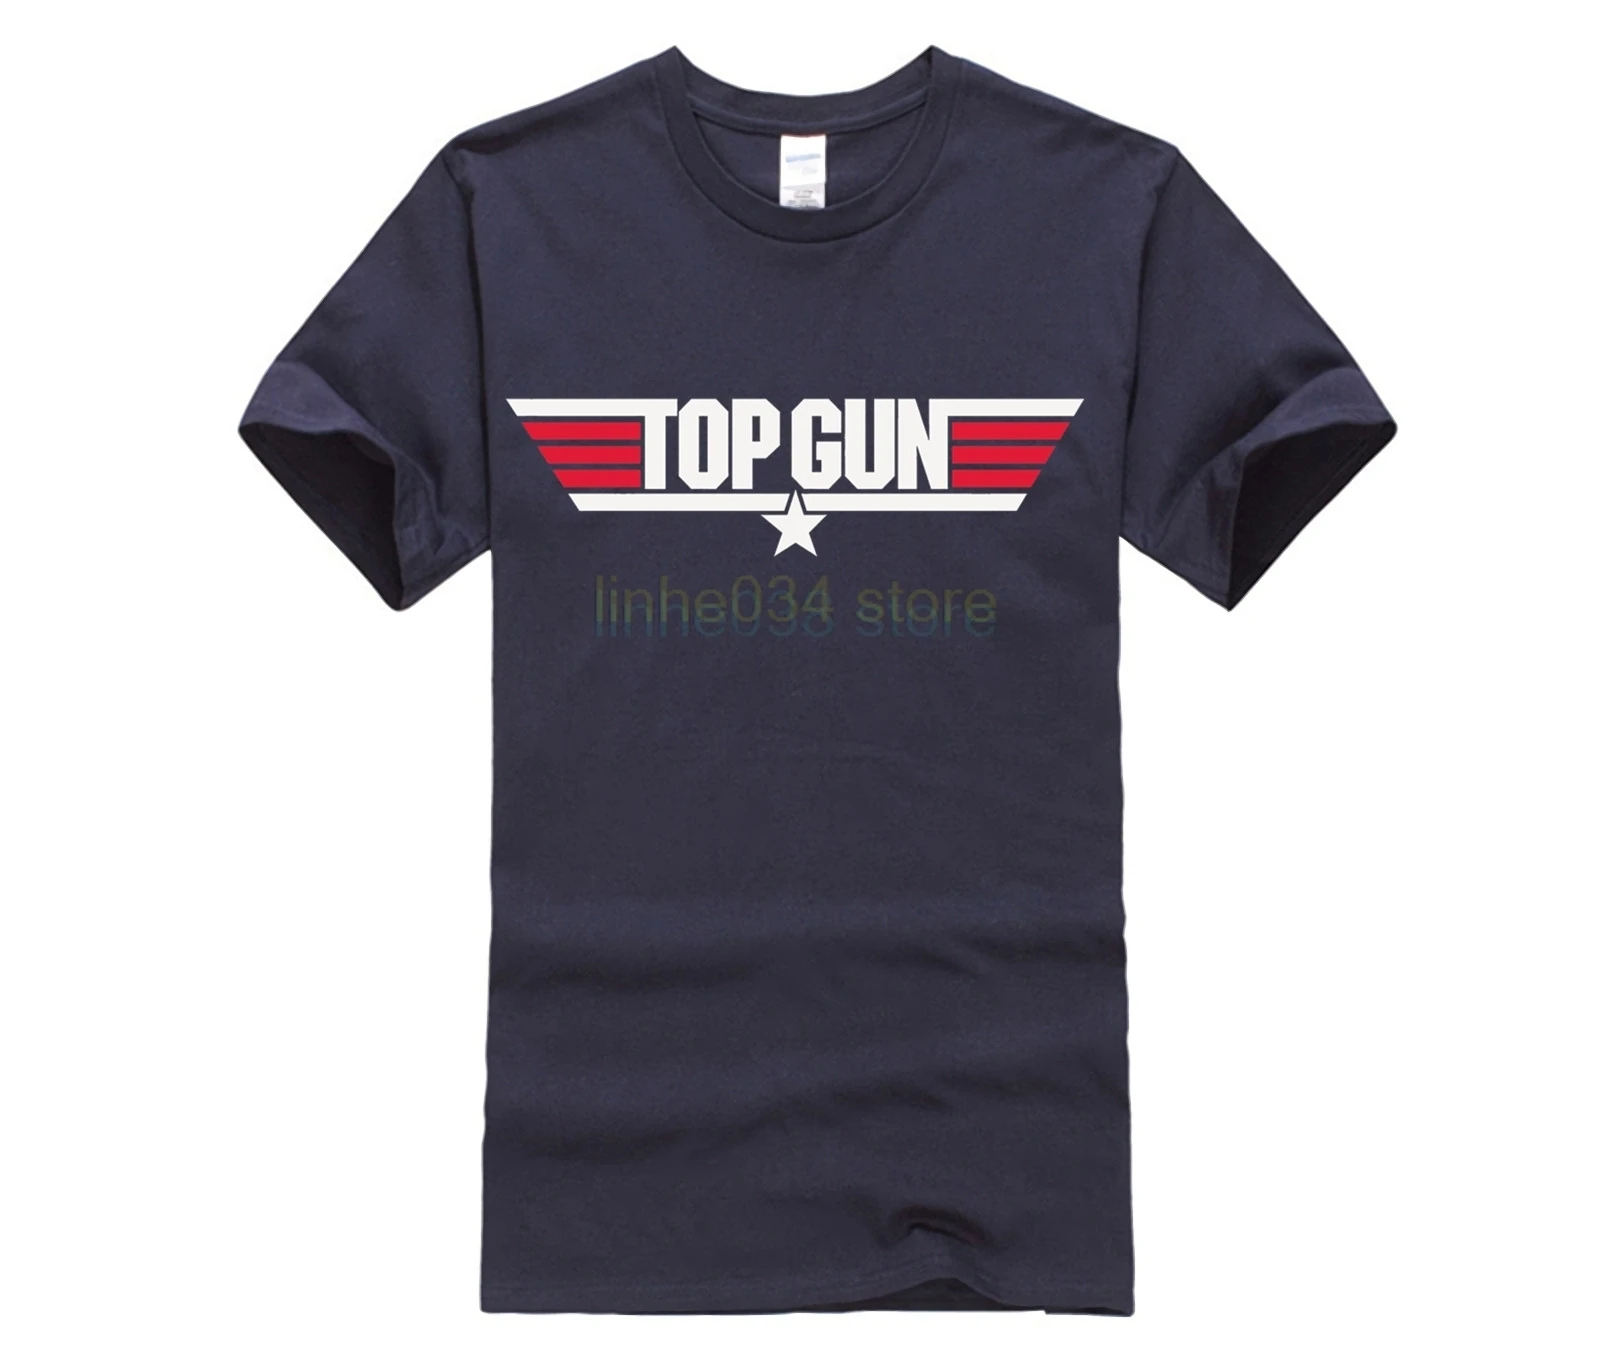 Krog Vratu Zabavno t-shirt Top Gun t-shirt